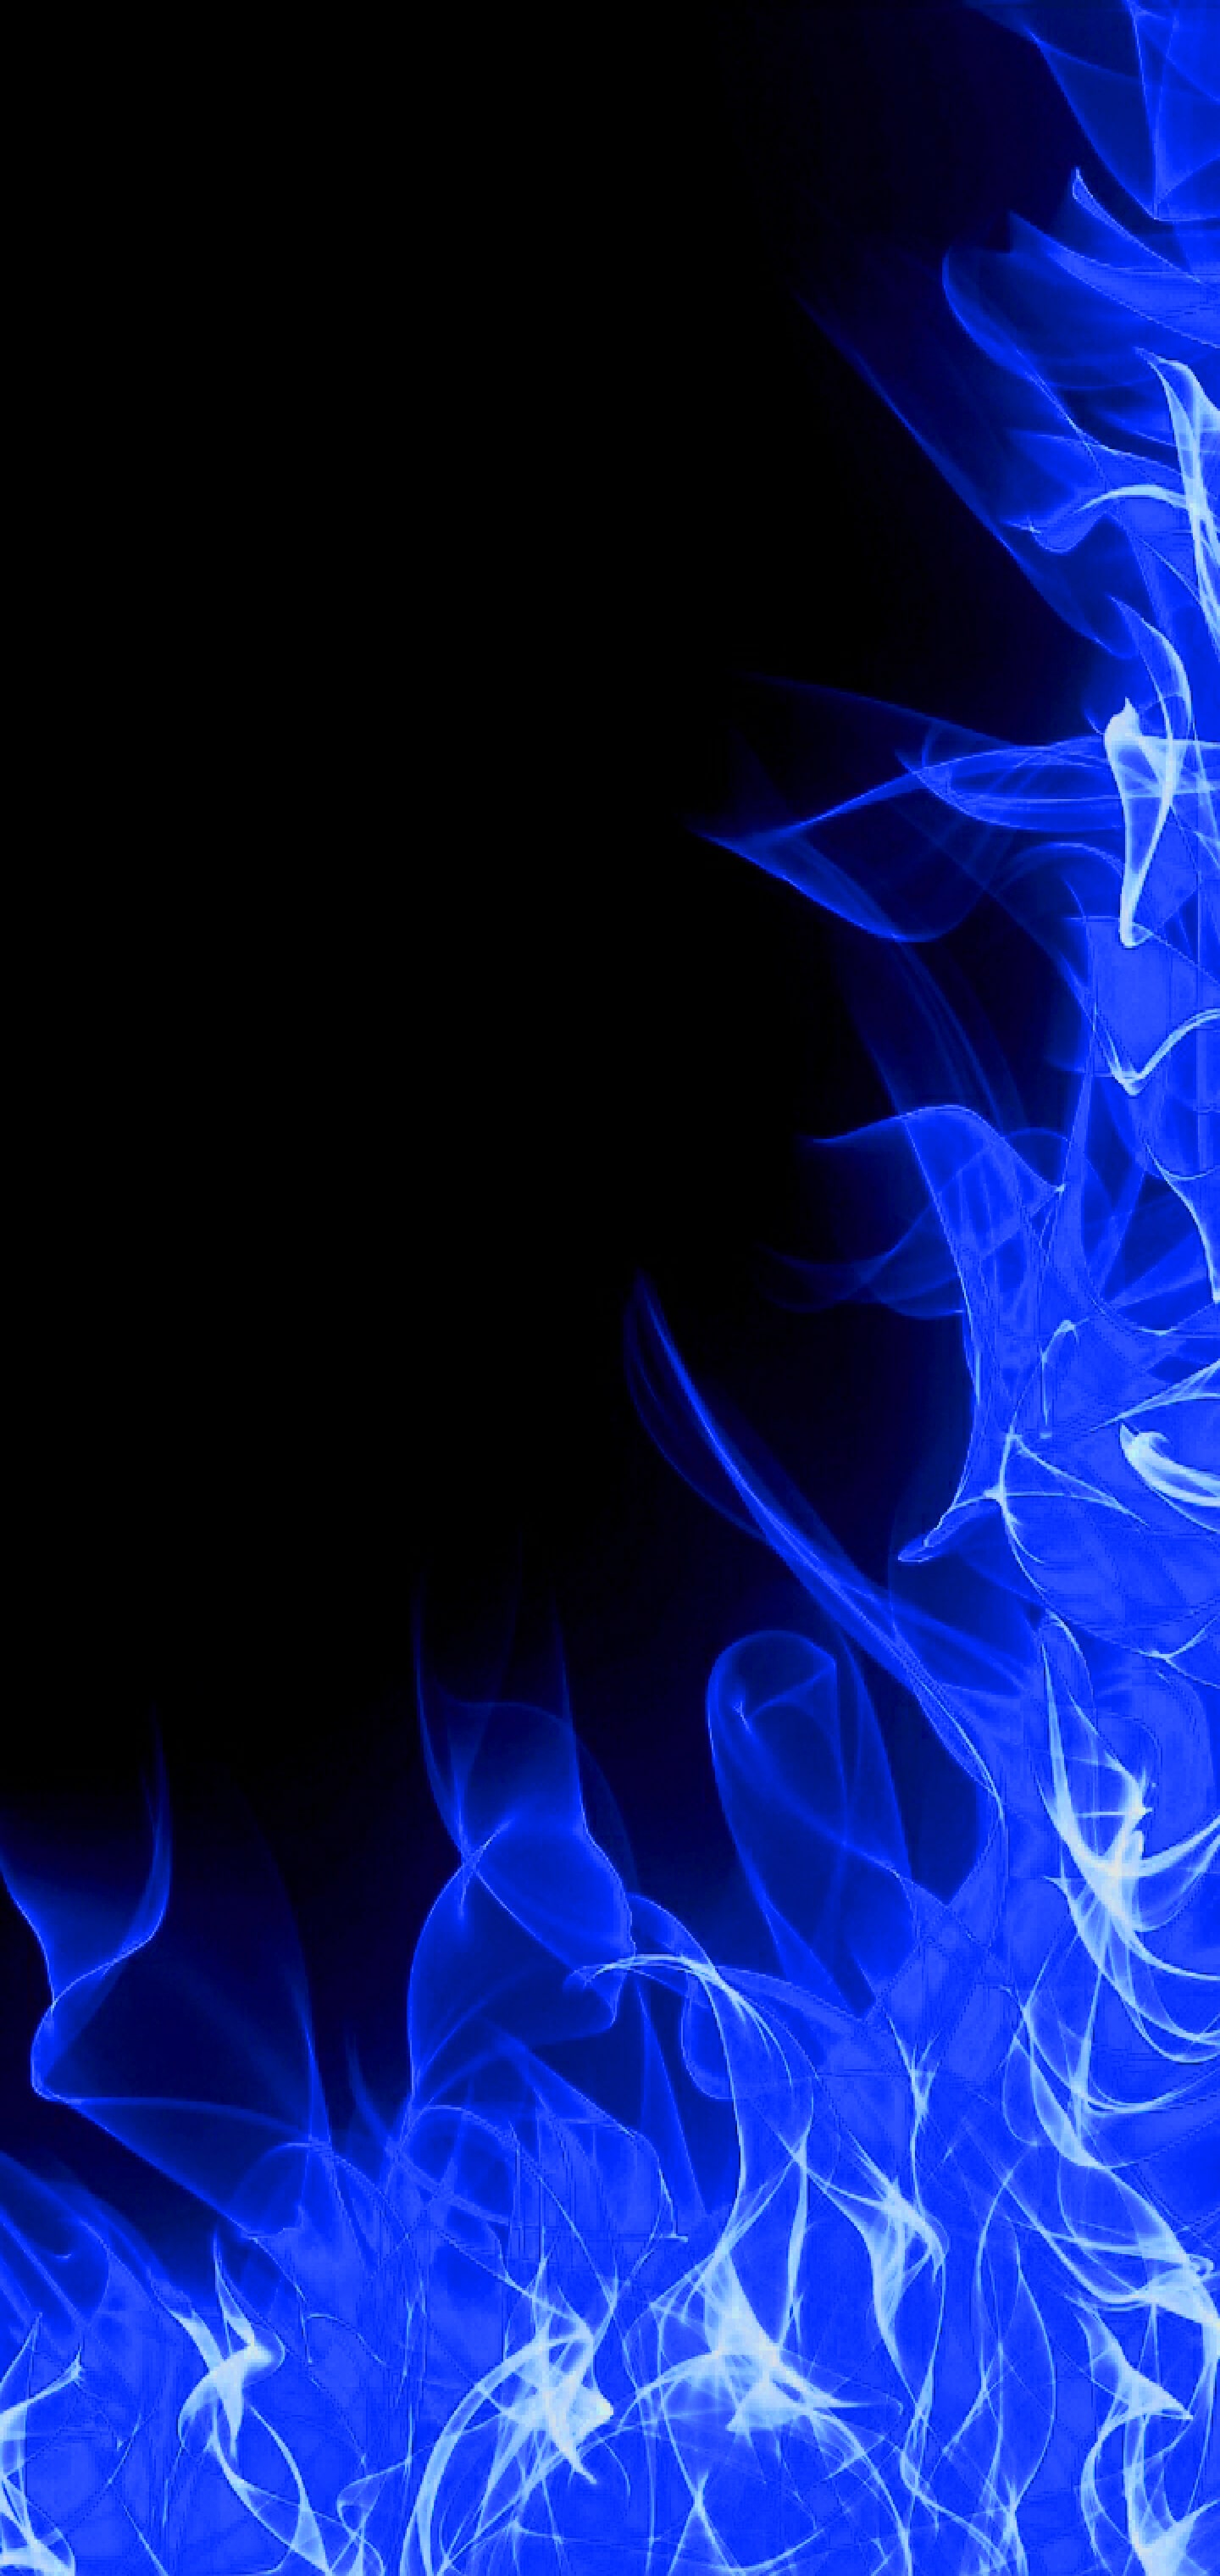 blue fire wallpaper background